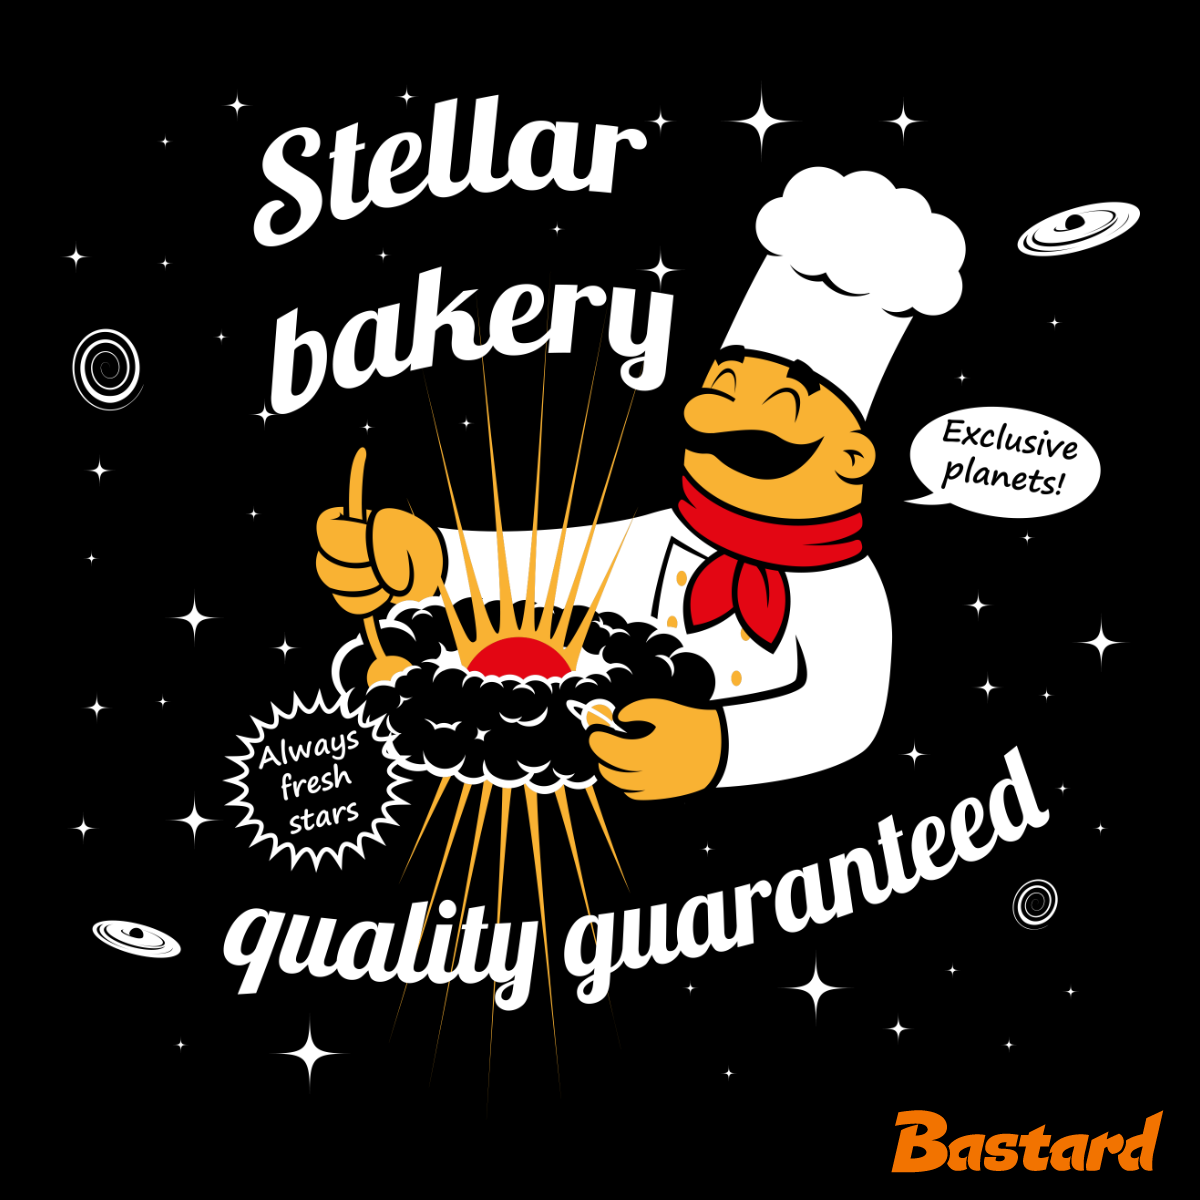 Stellar bakery